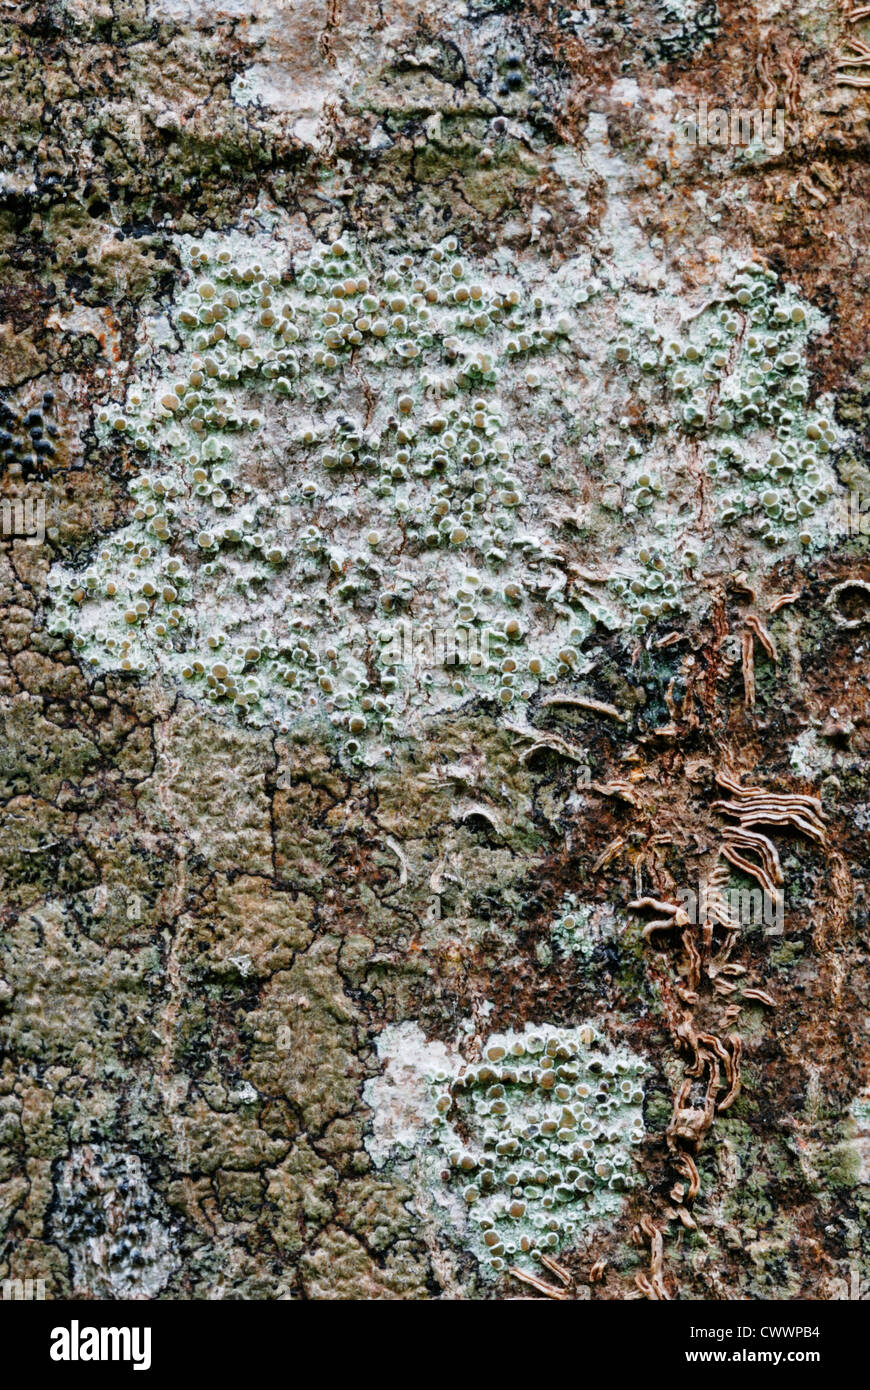 Lecanora chlarotera lichen growing on tree bark, Wales, UK. Stock Photo